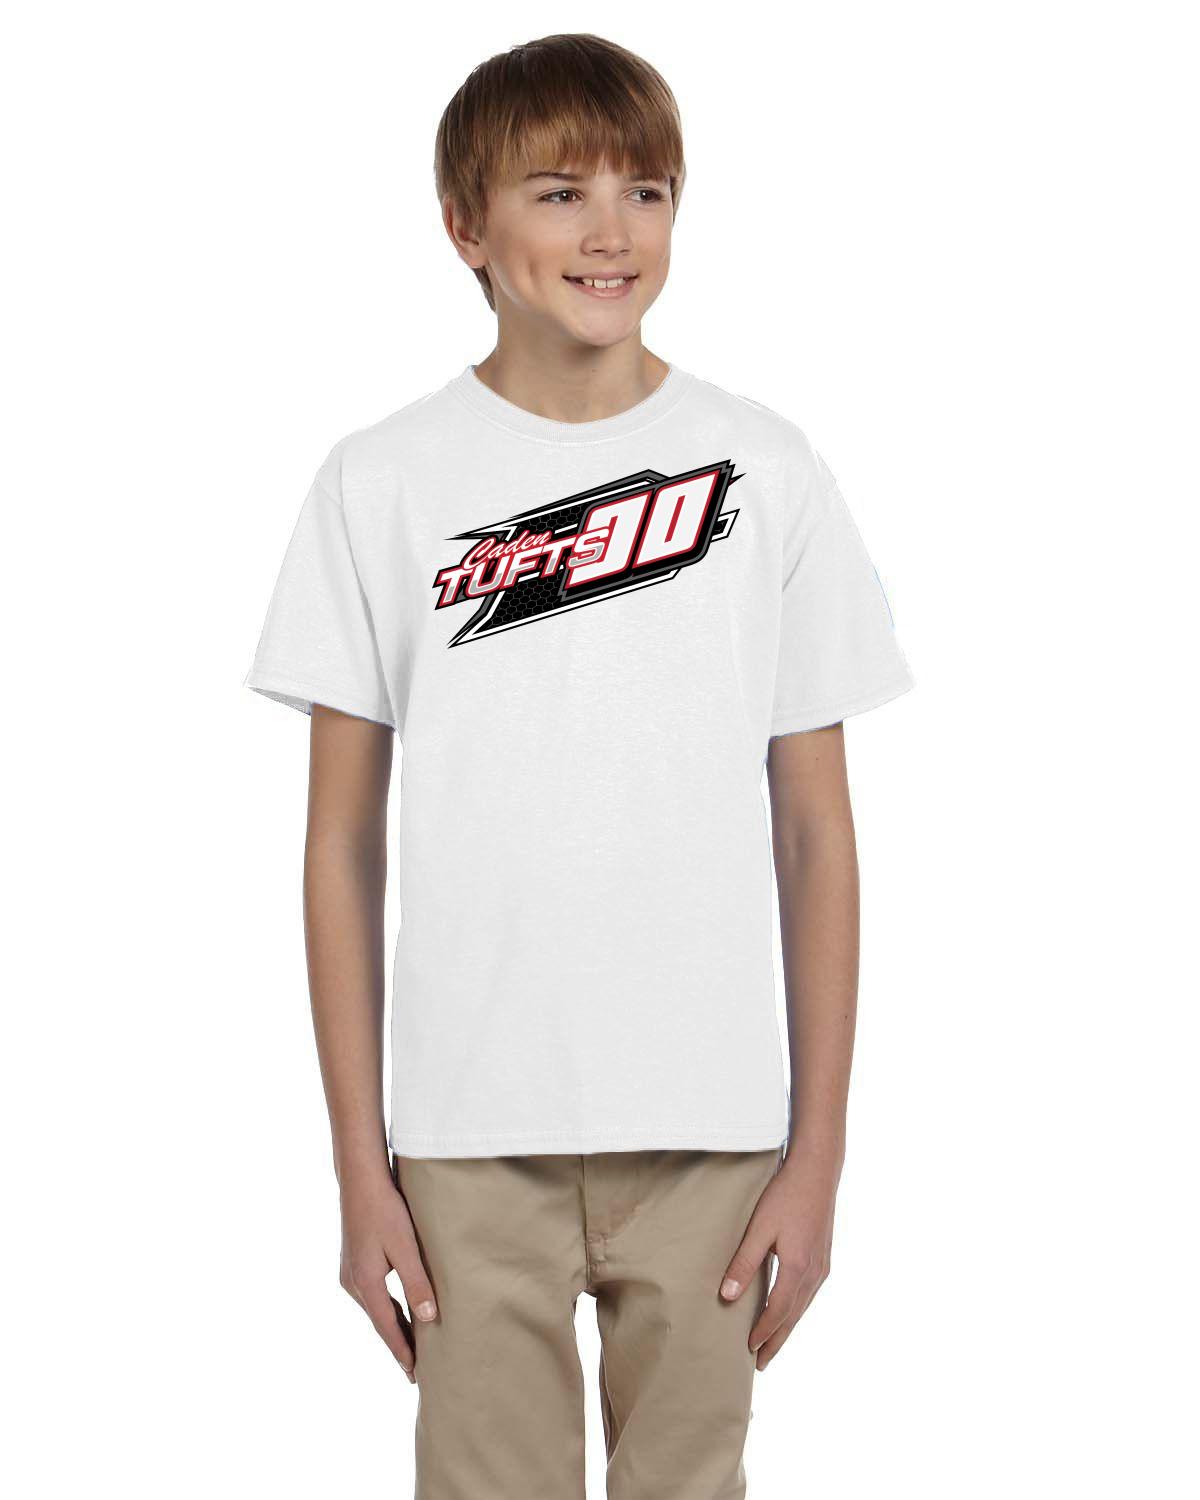 Caden Tufts Legends Racing Youth tshirt